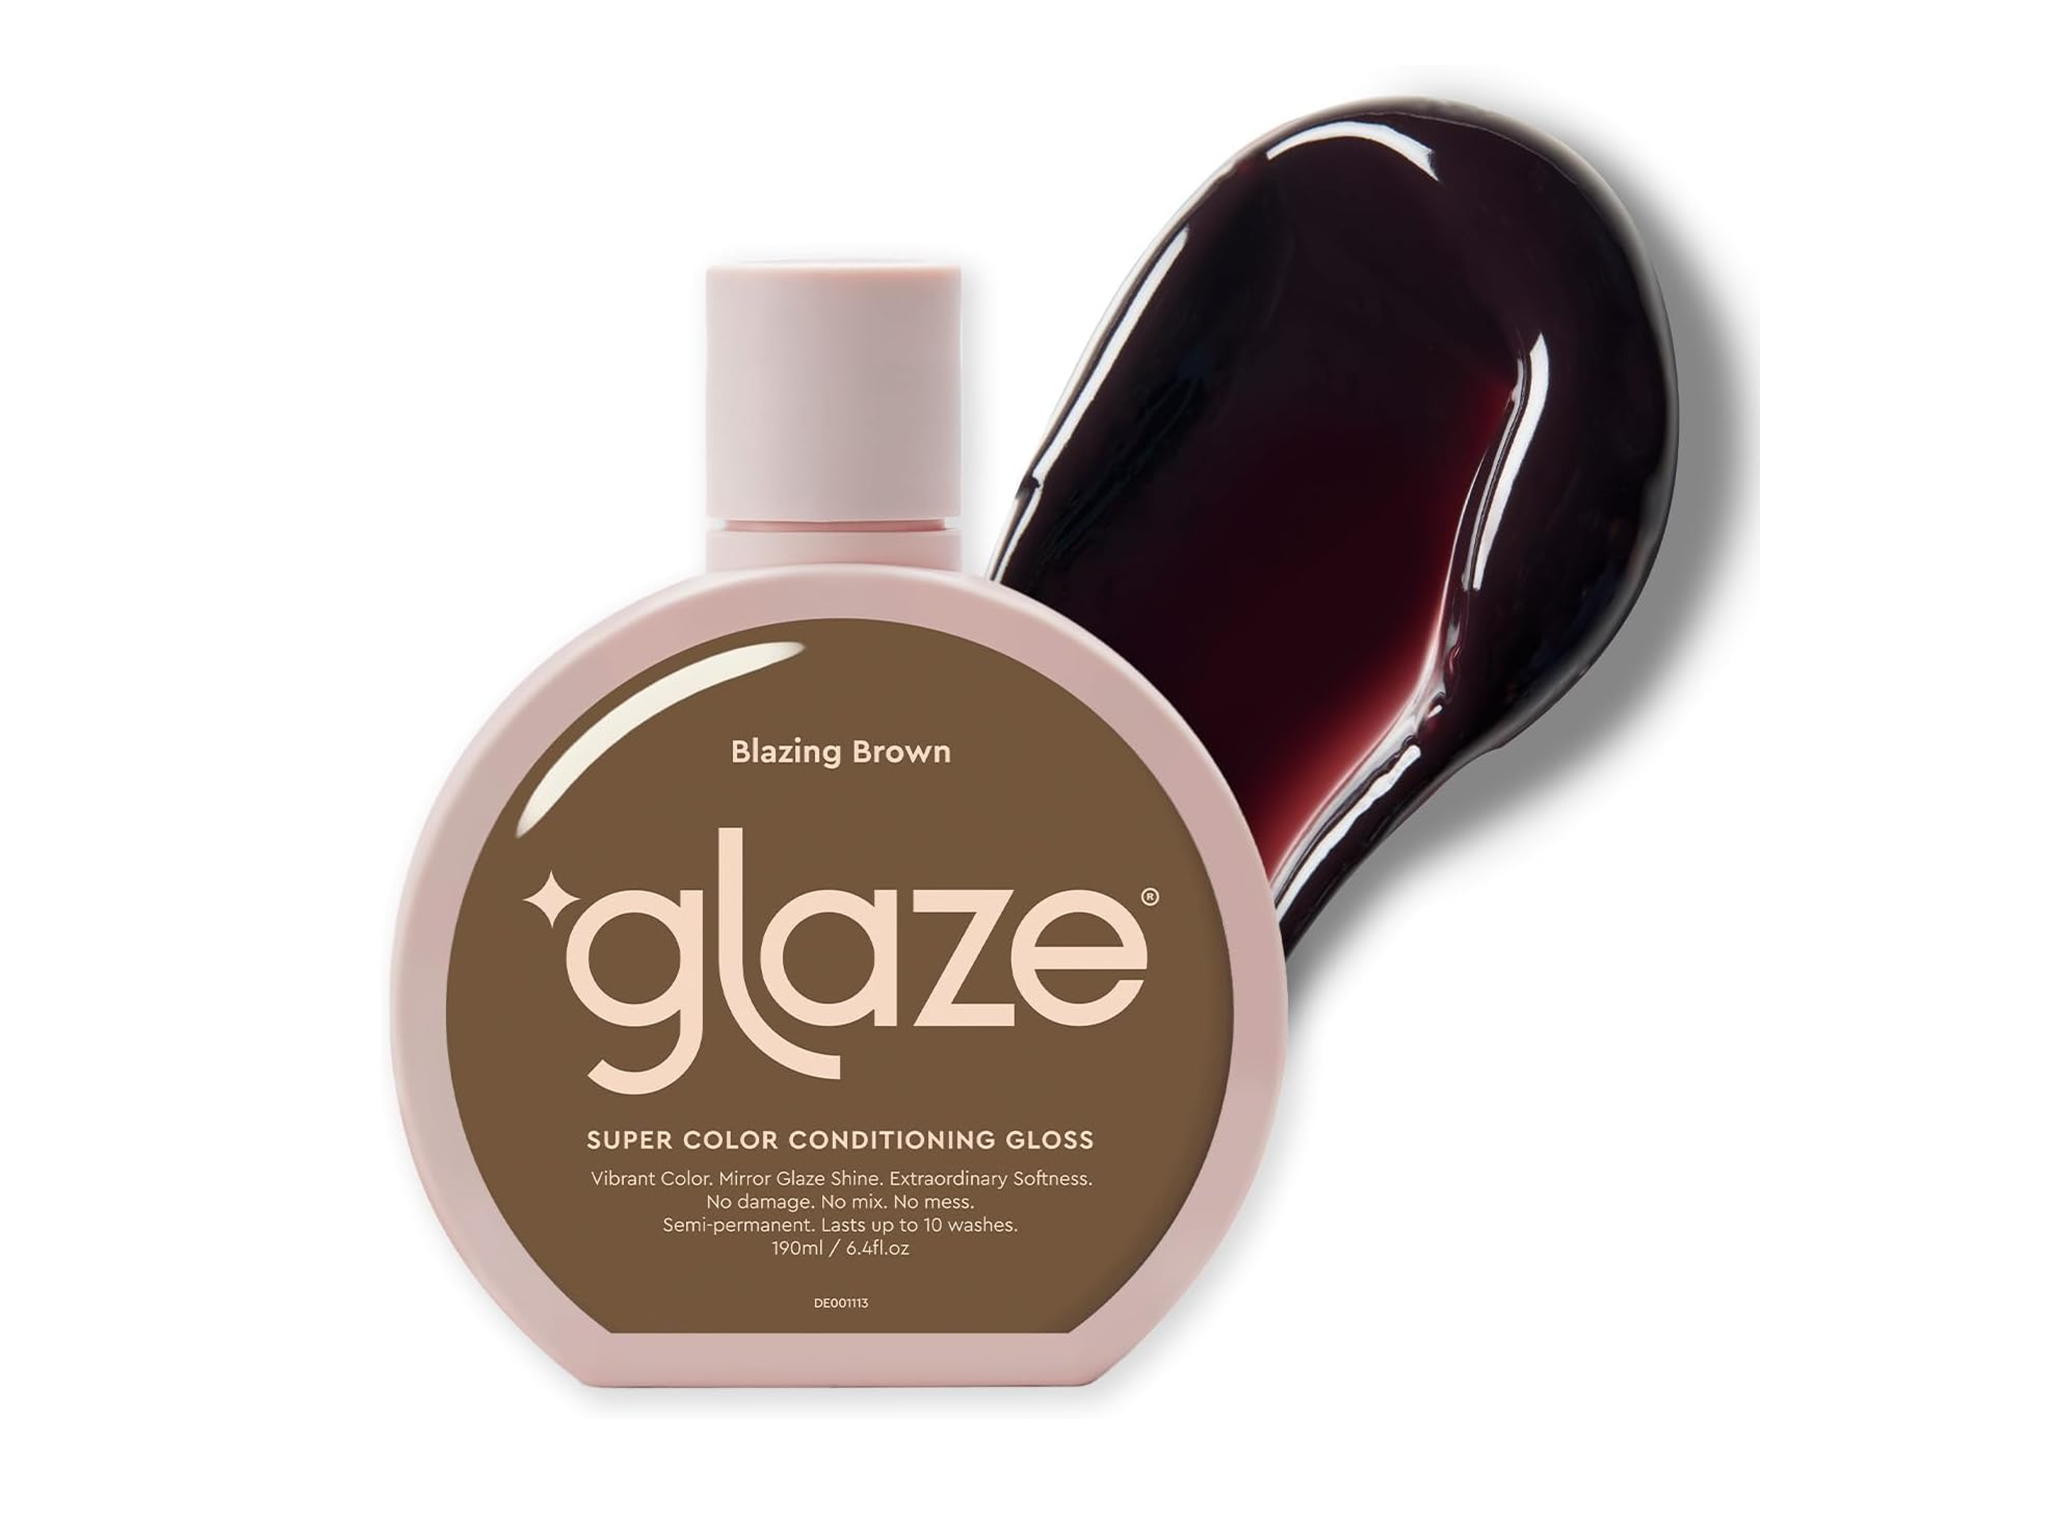 Glaze super conditioning gloss